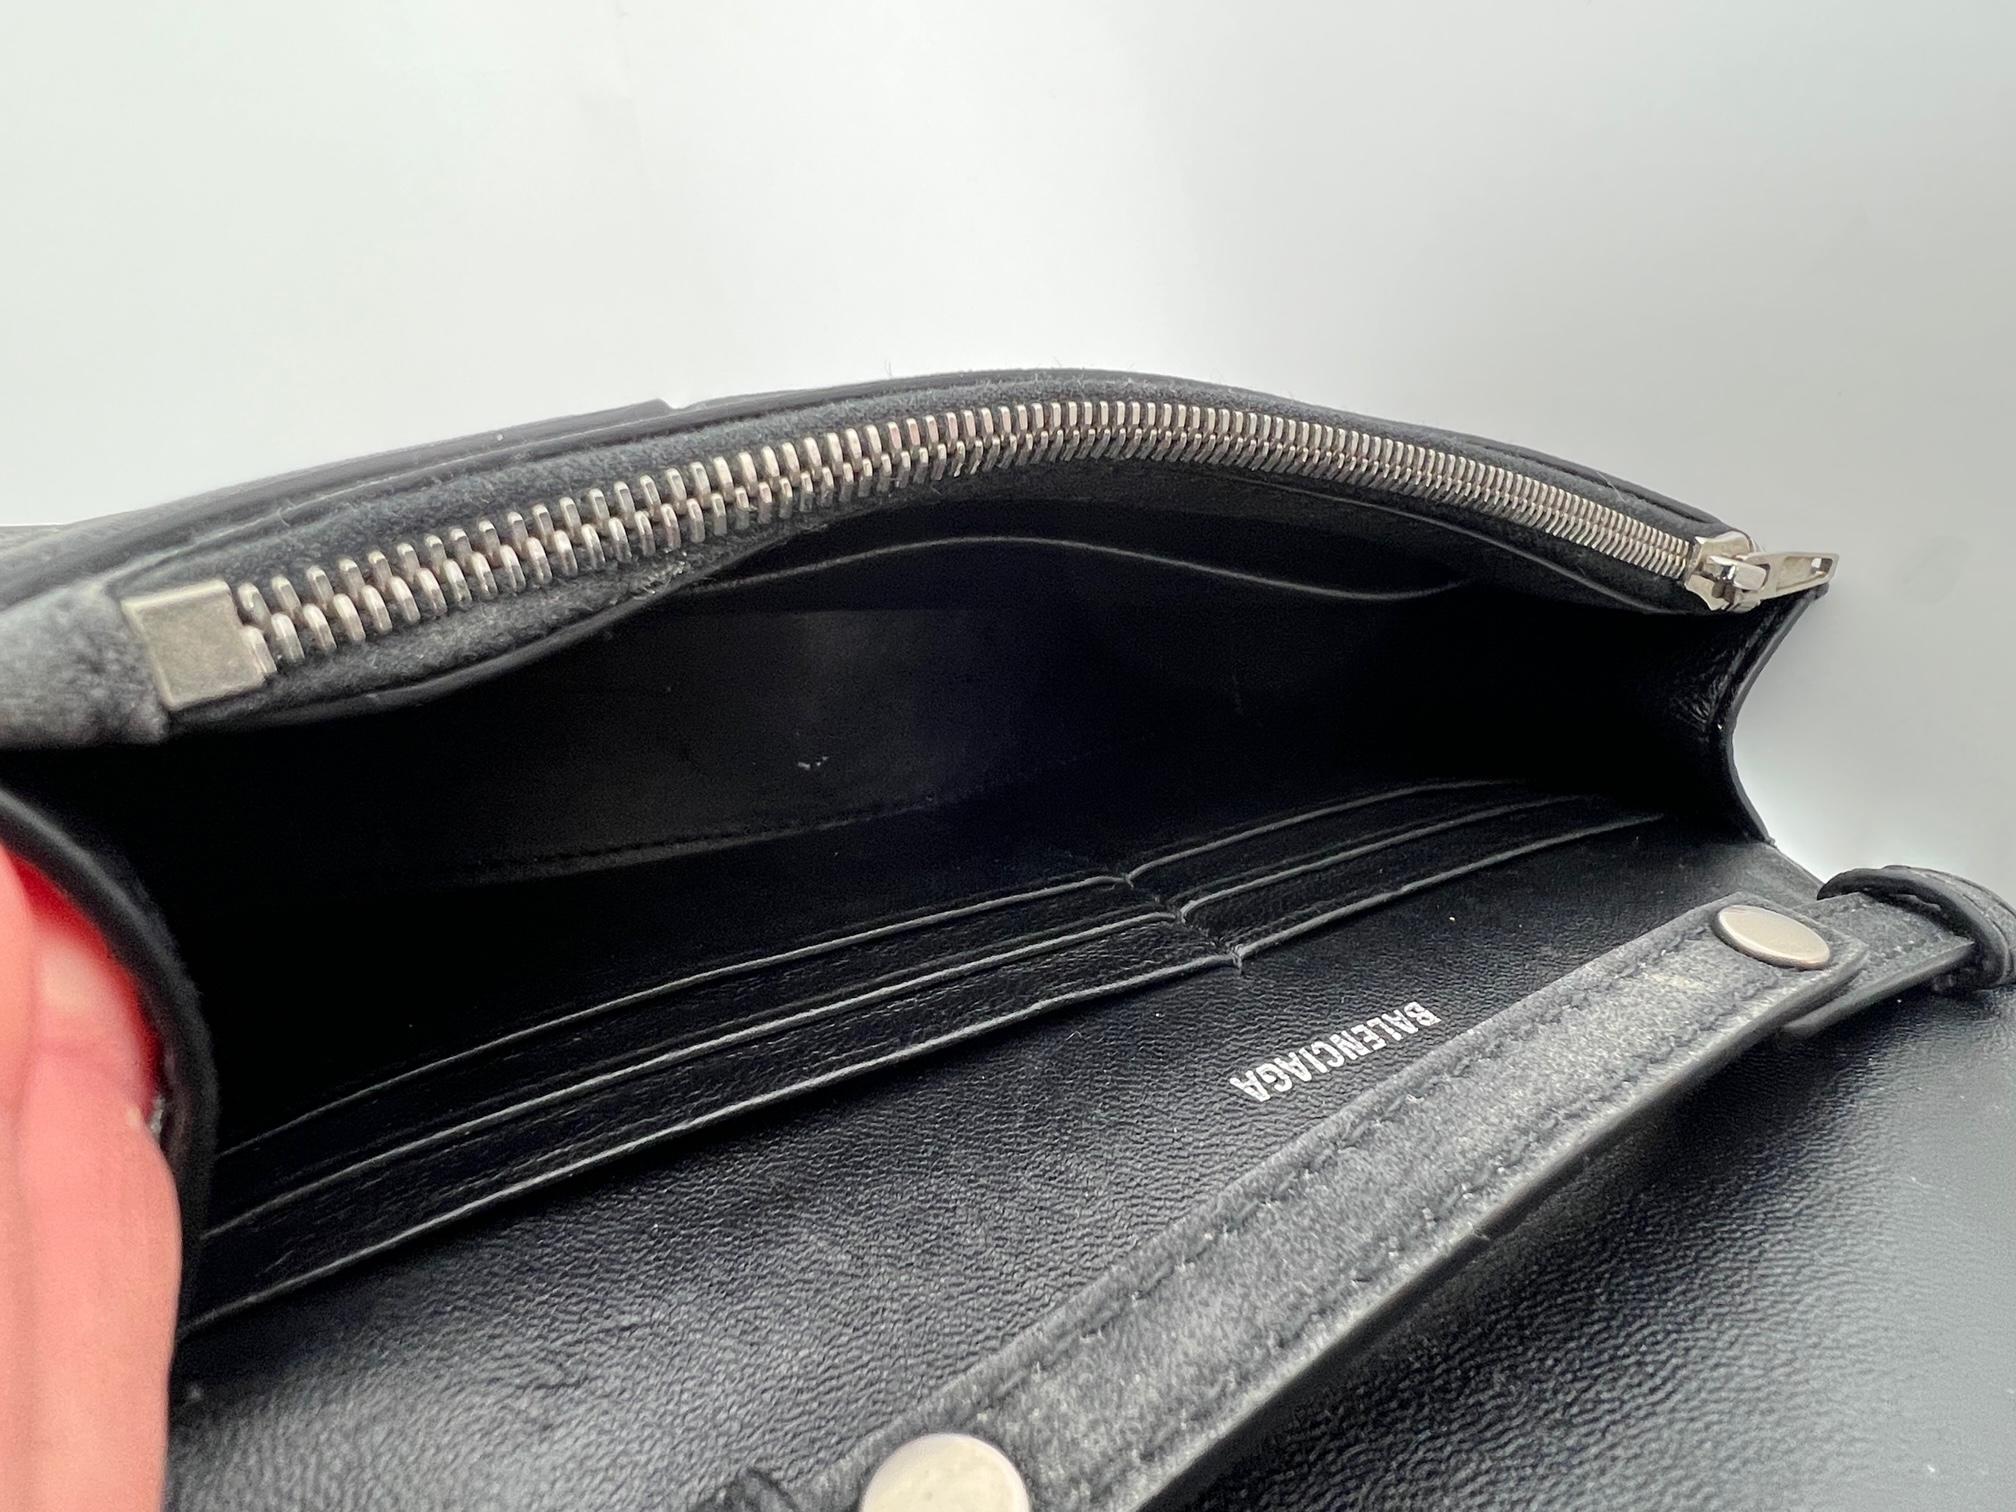 BALENCIAGA Hourglass Wallet On Chain Black Glitter Clutch Shoulder Bag For Sale 1